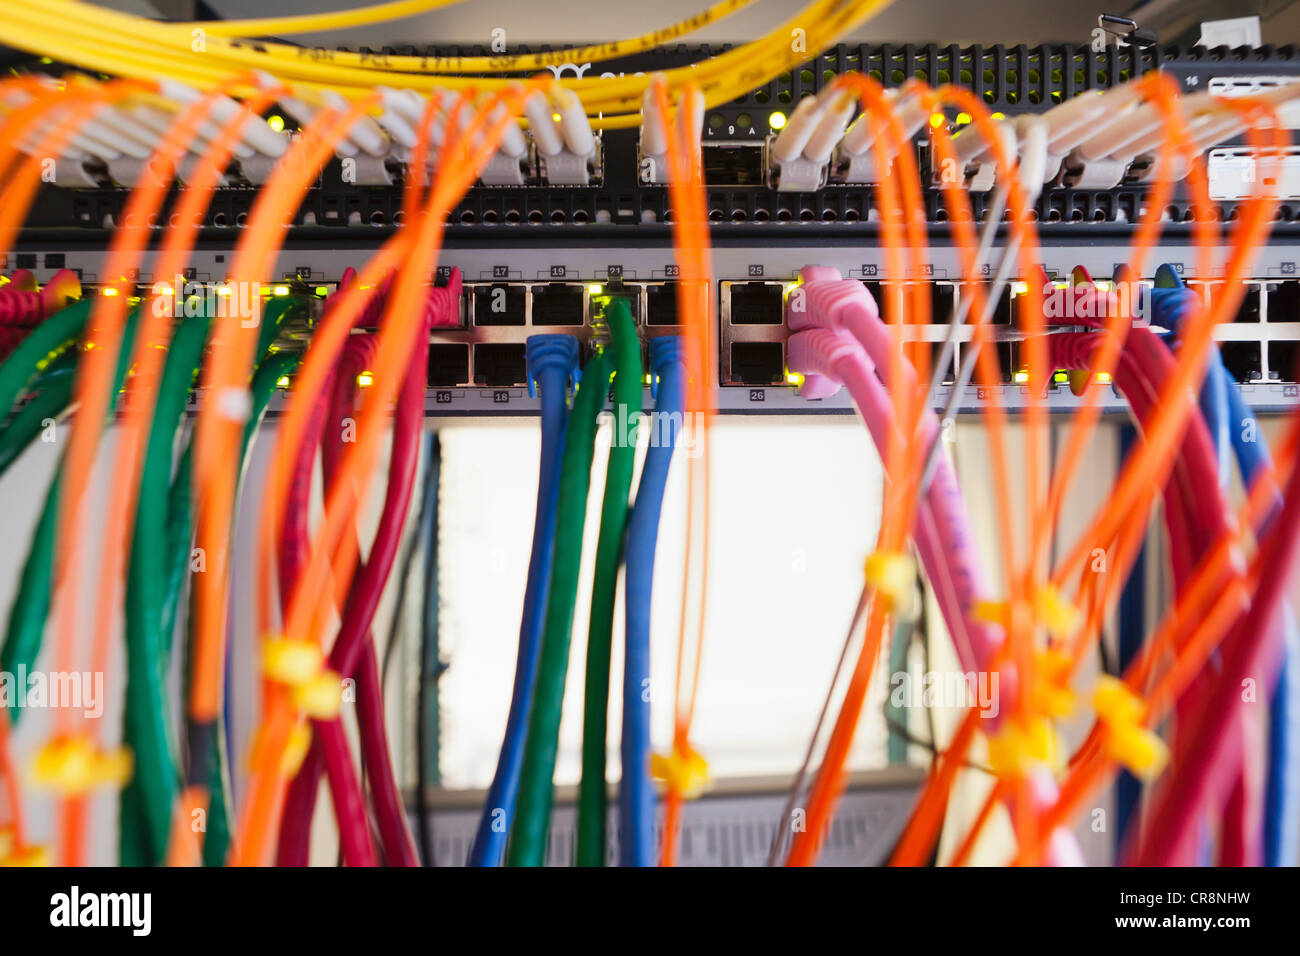 Los cables en la sala de servidores. Foto de stock